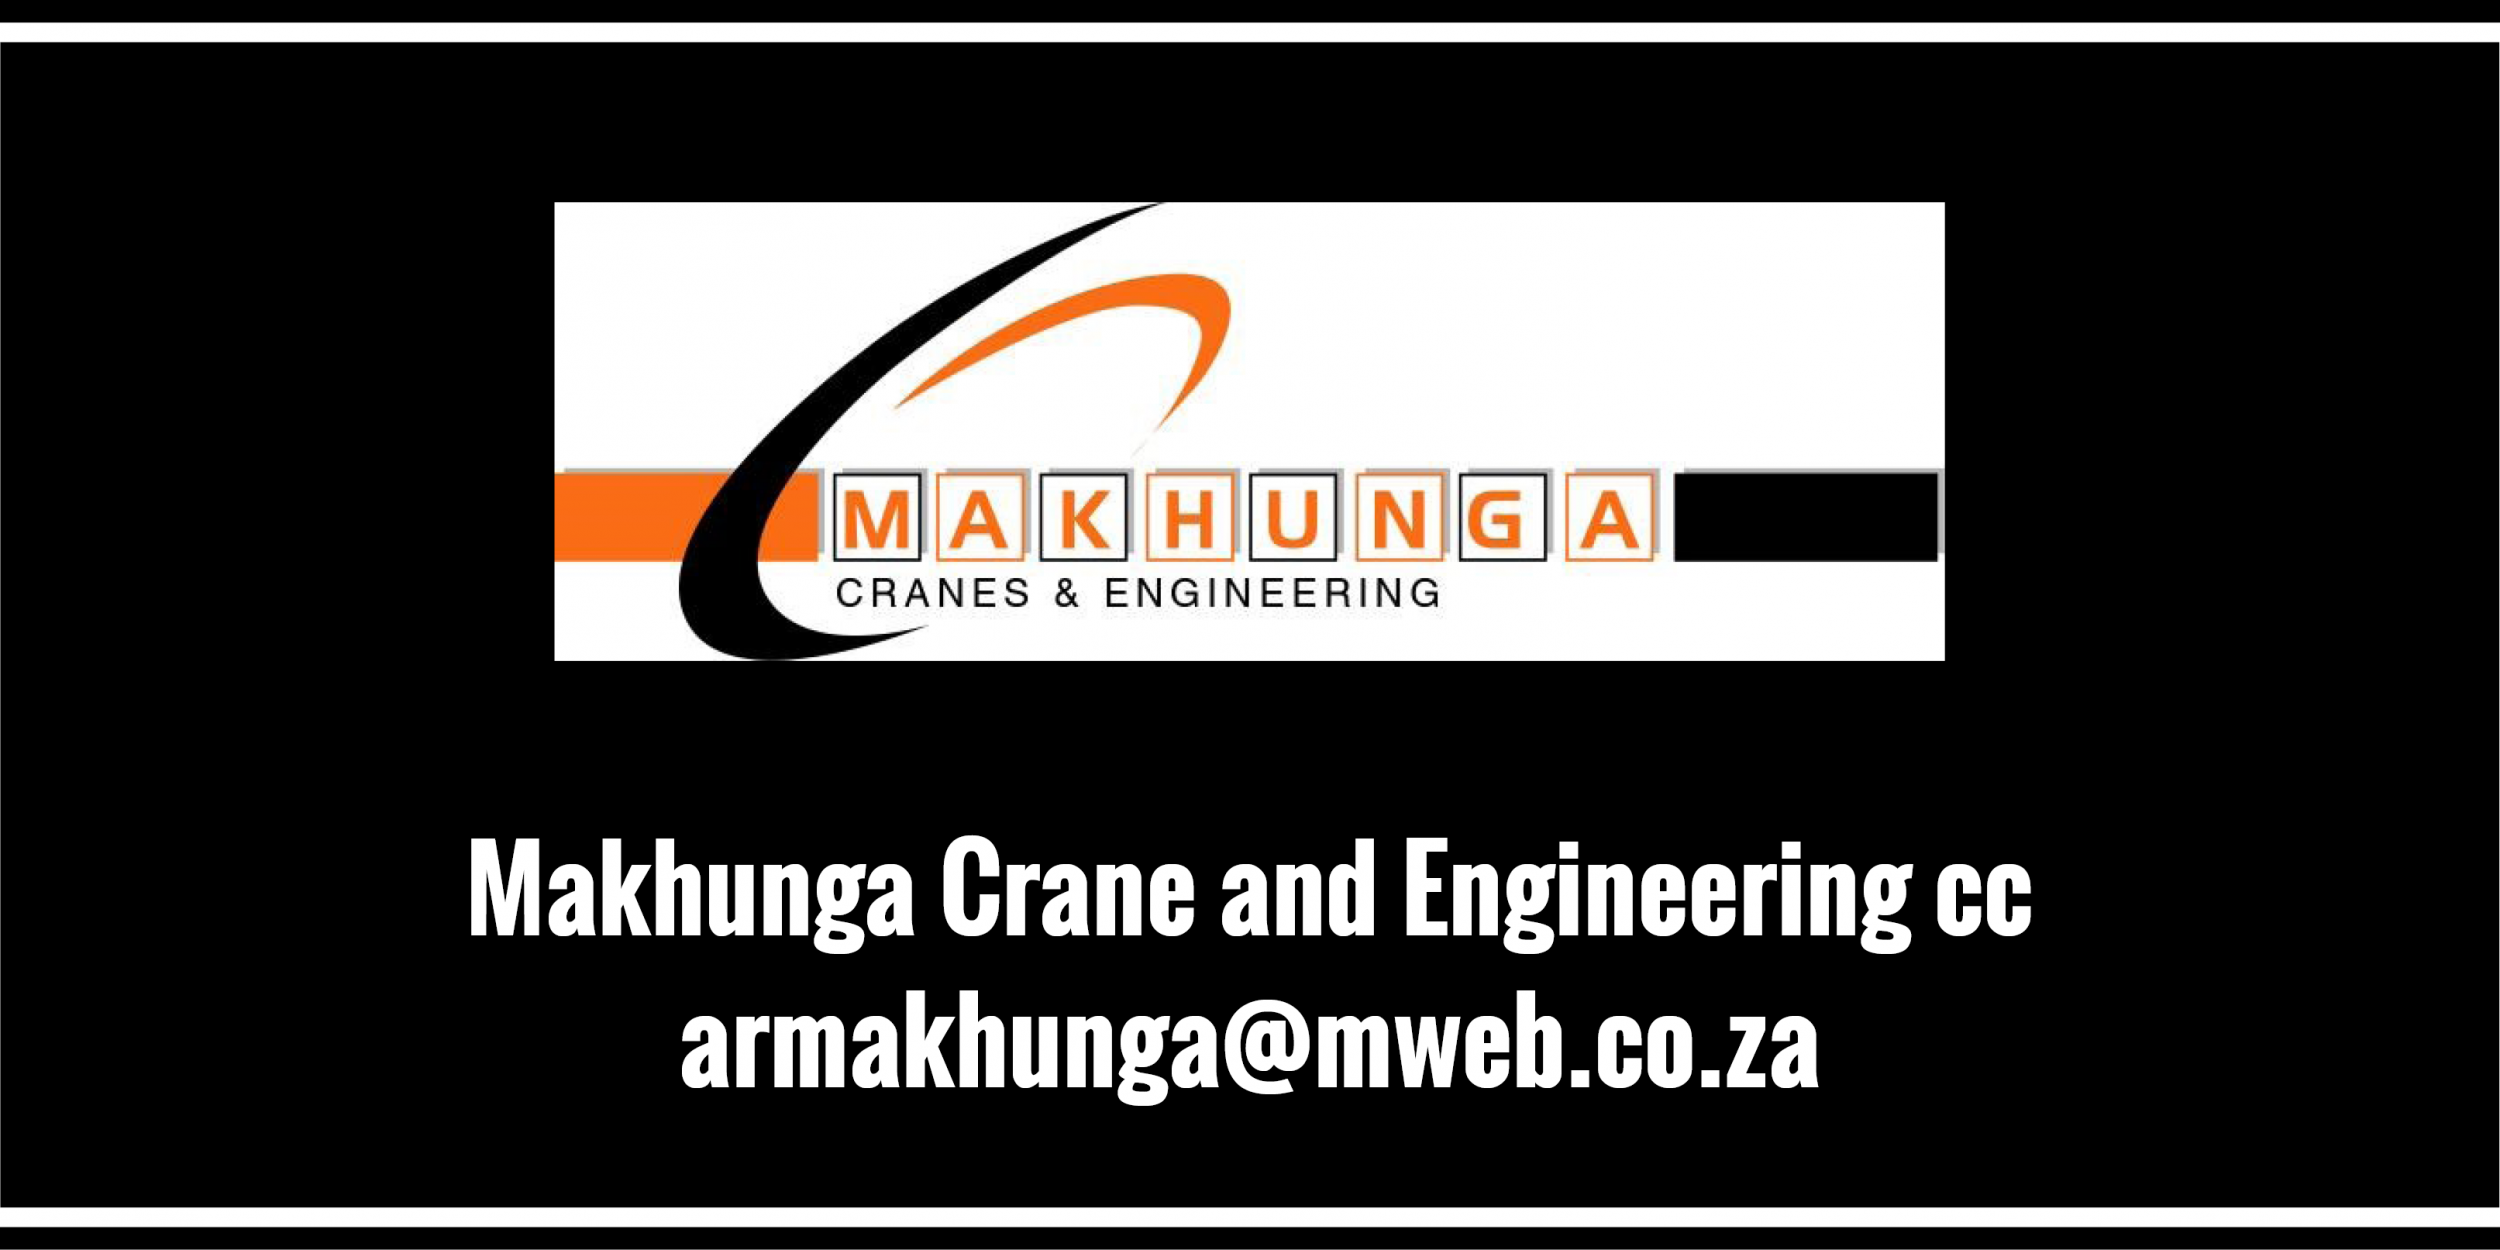 Makhunga Crane and Engineering cc